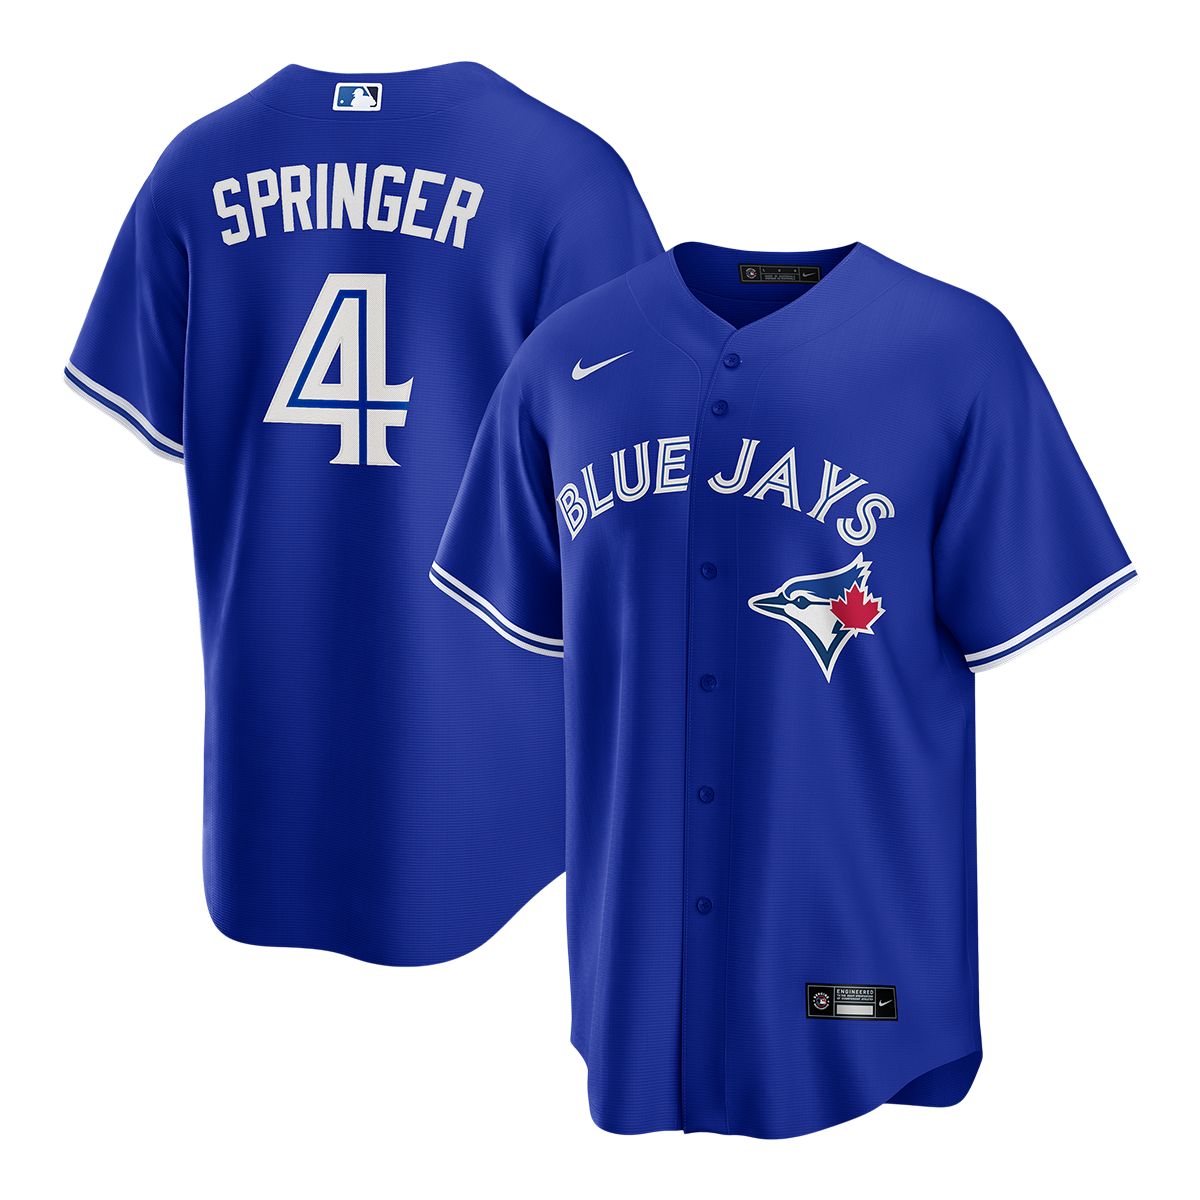 George Springer Toronto Blue Jays Signed Grey Nike Authentic Jersey